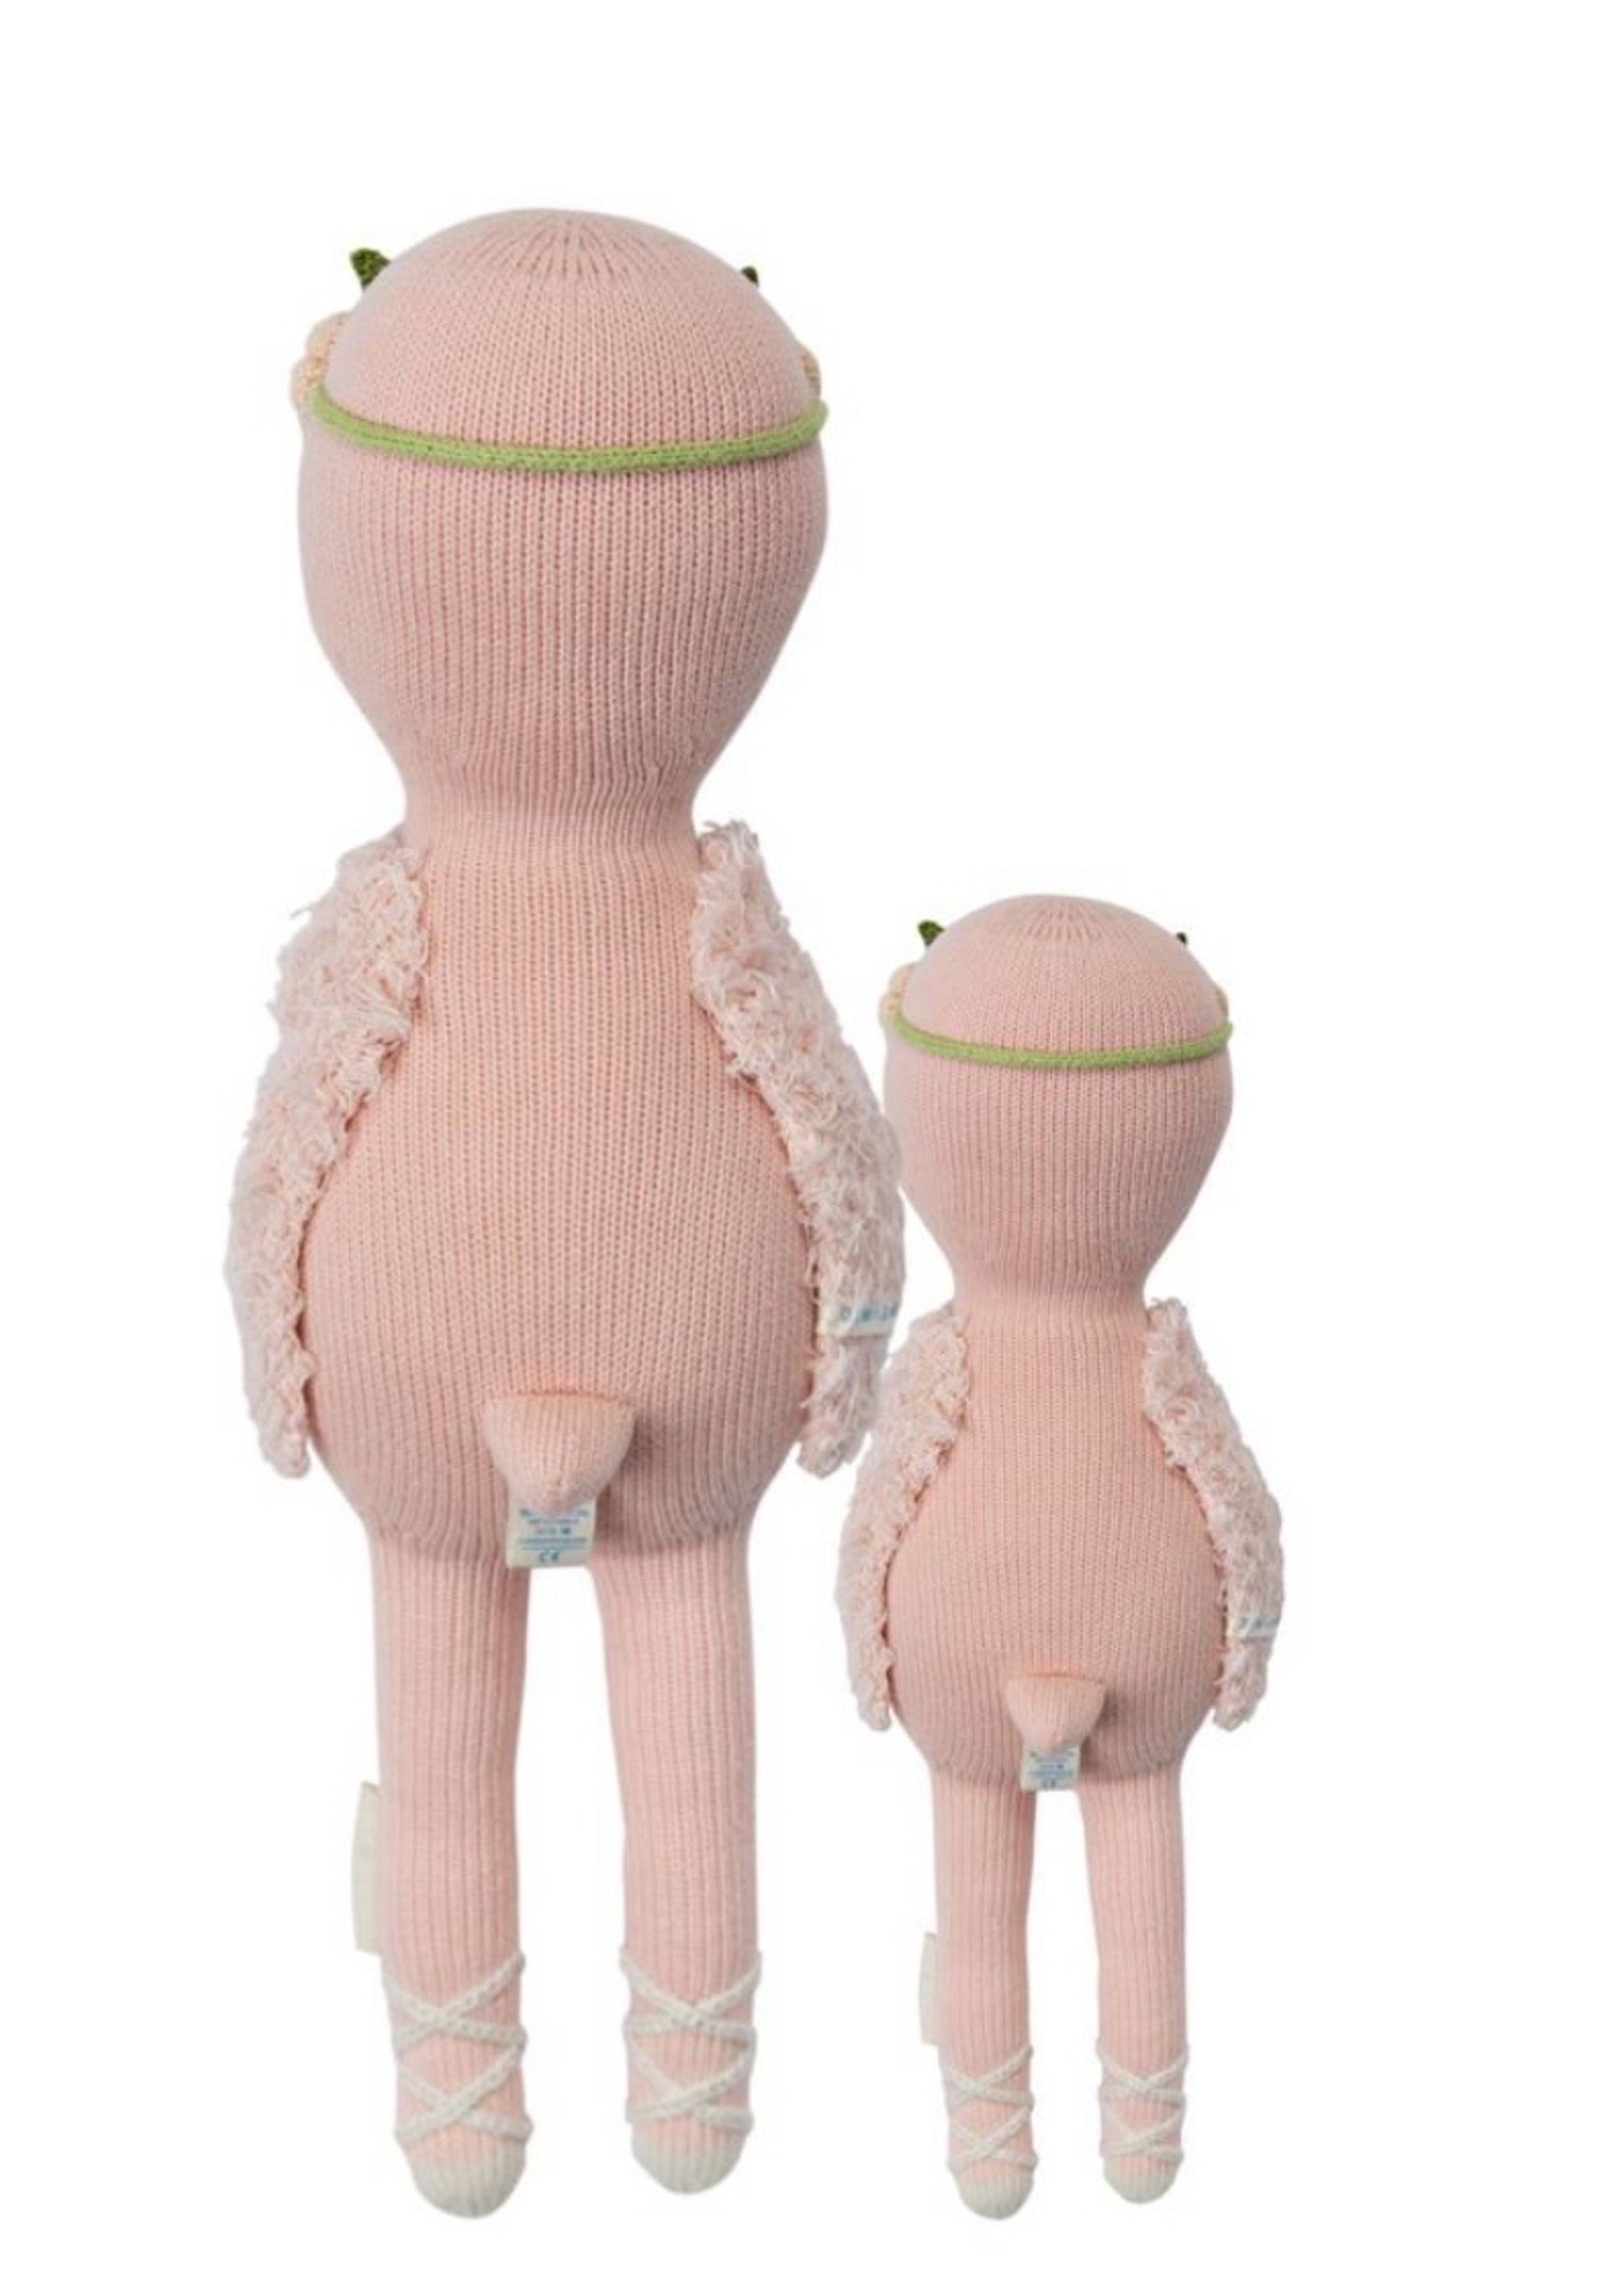 cuddle + kind Mini Flamingo Knit Doll PENELOPE